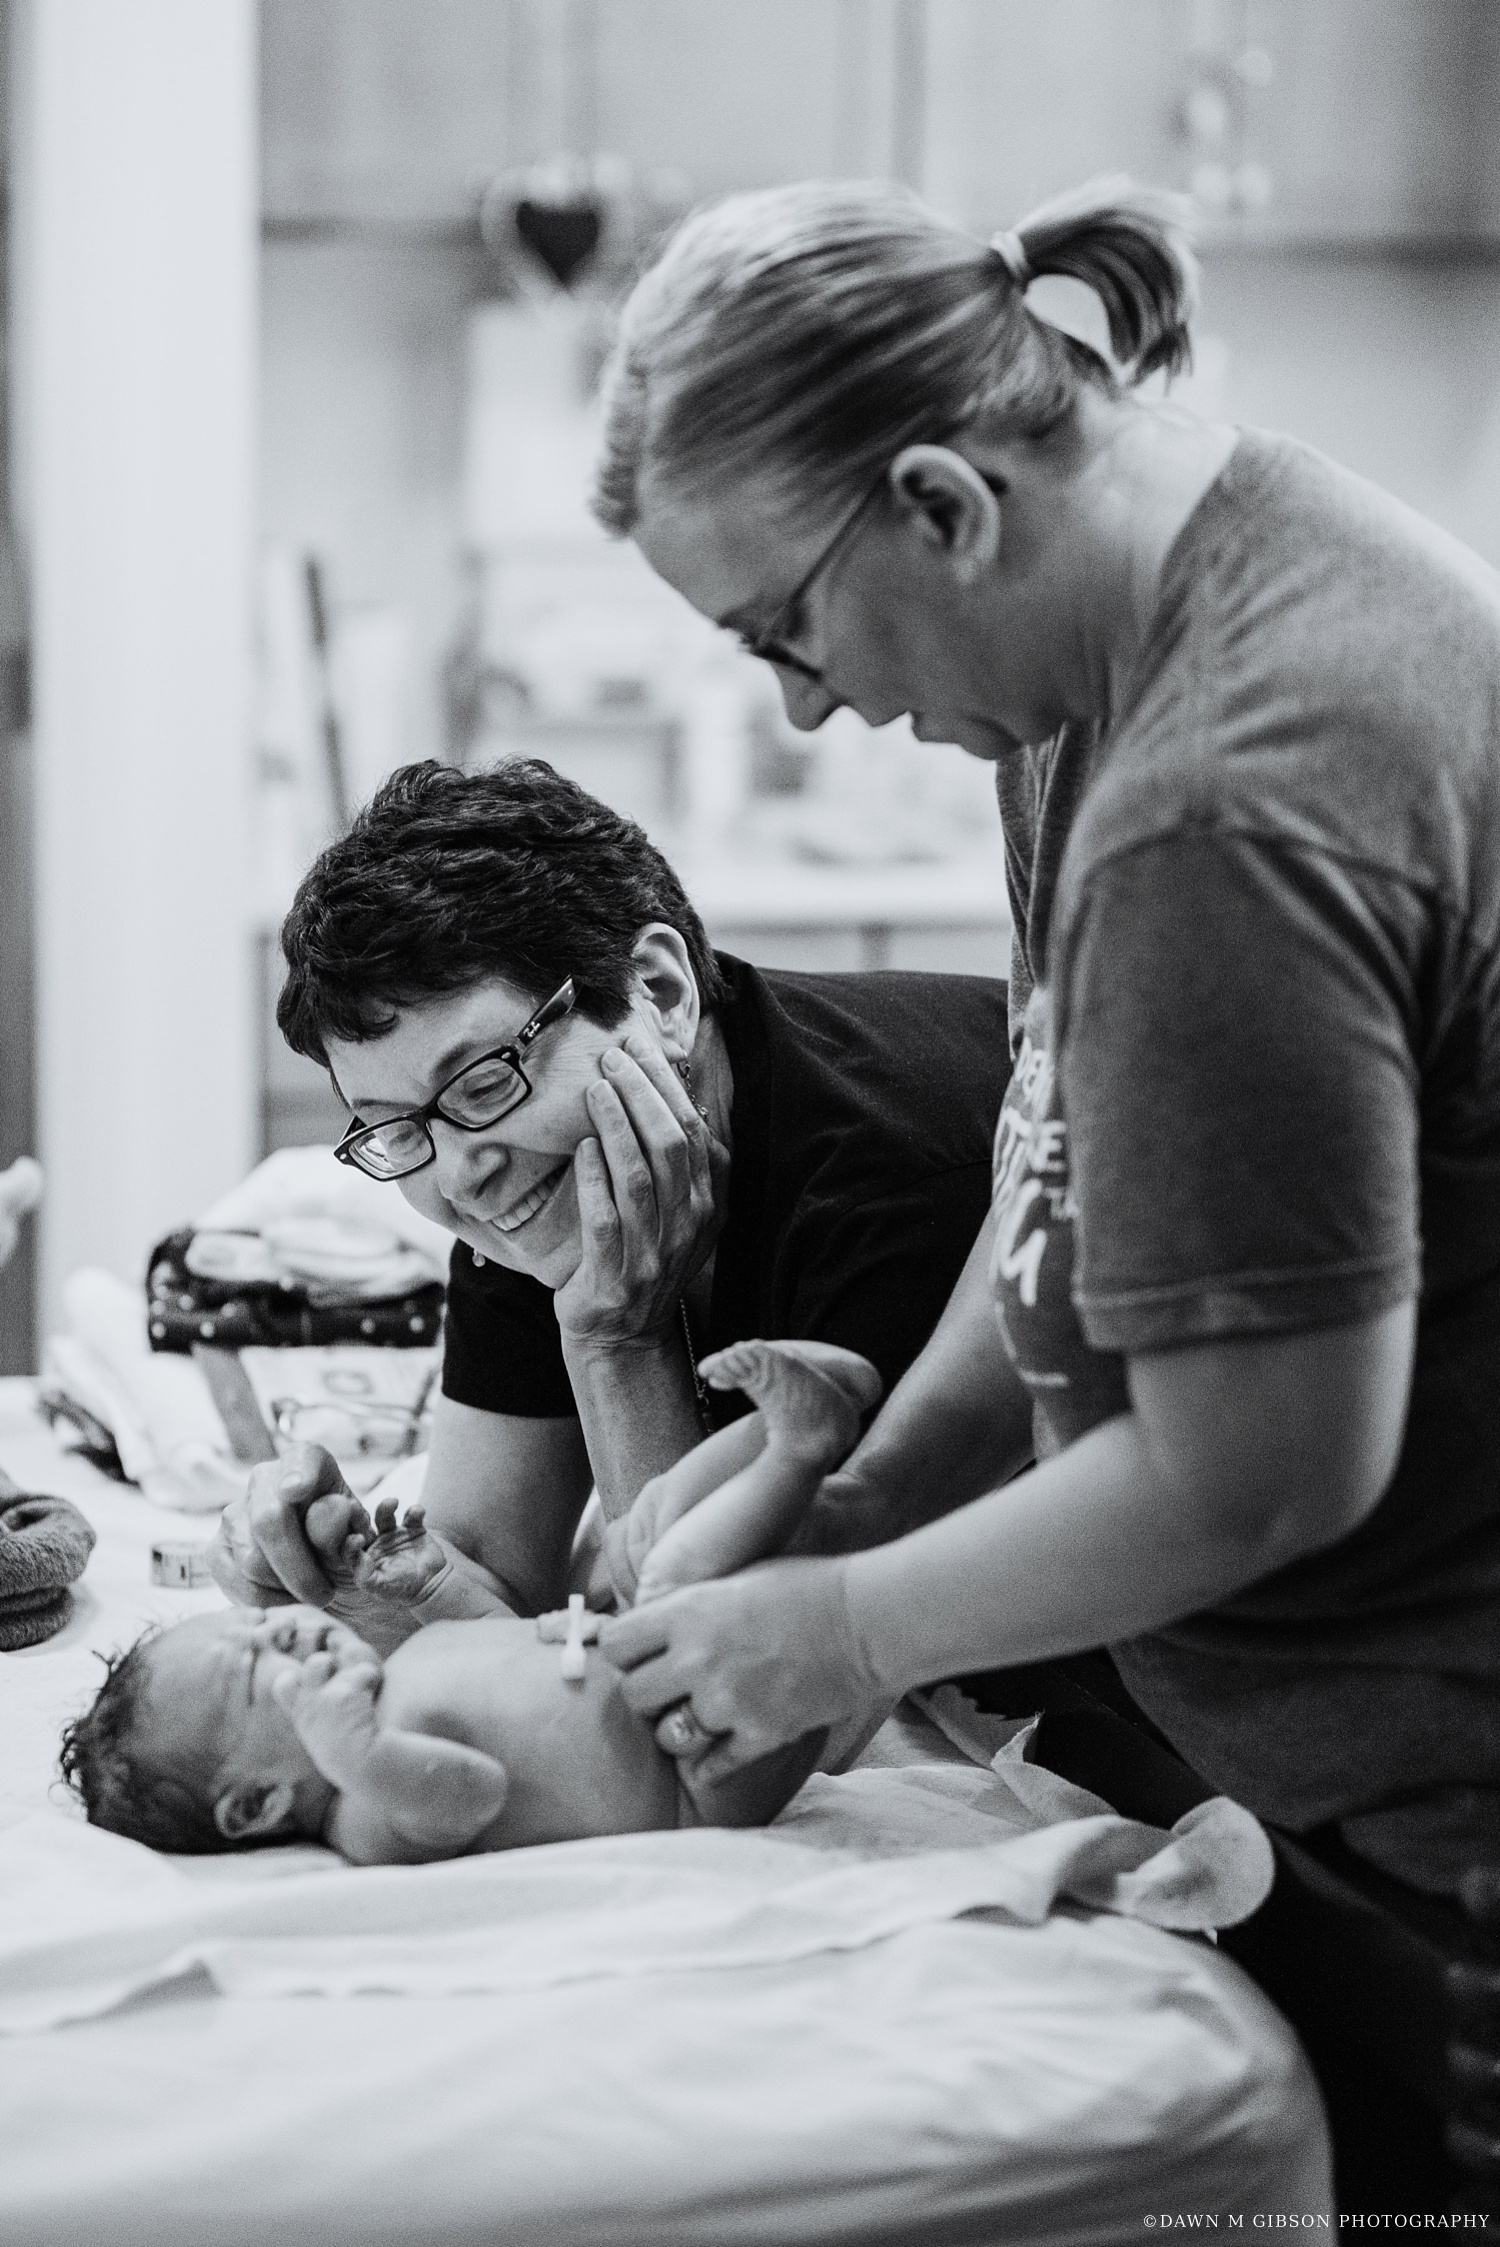 Kurtzworth Birth Story | Photos by Dawn M Gibson Photography